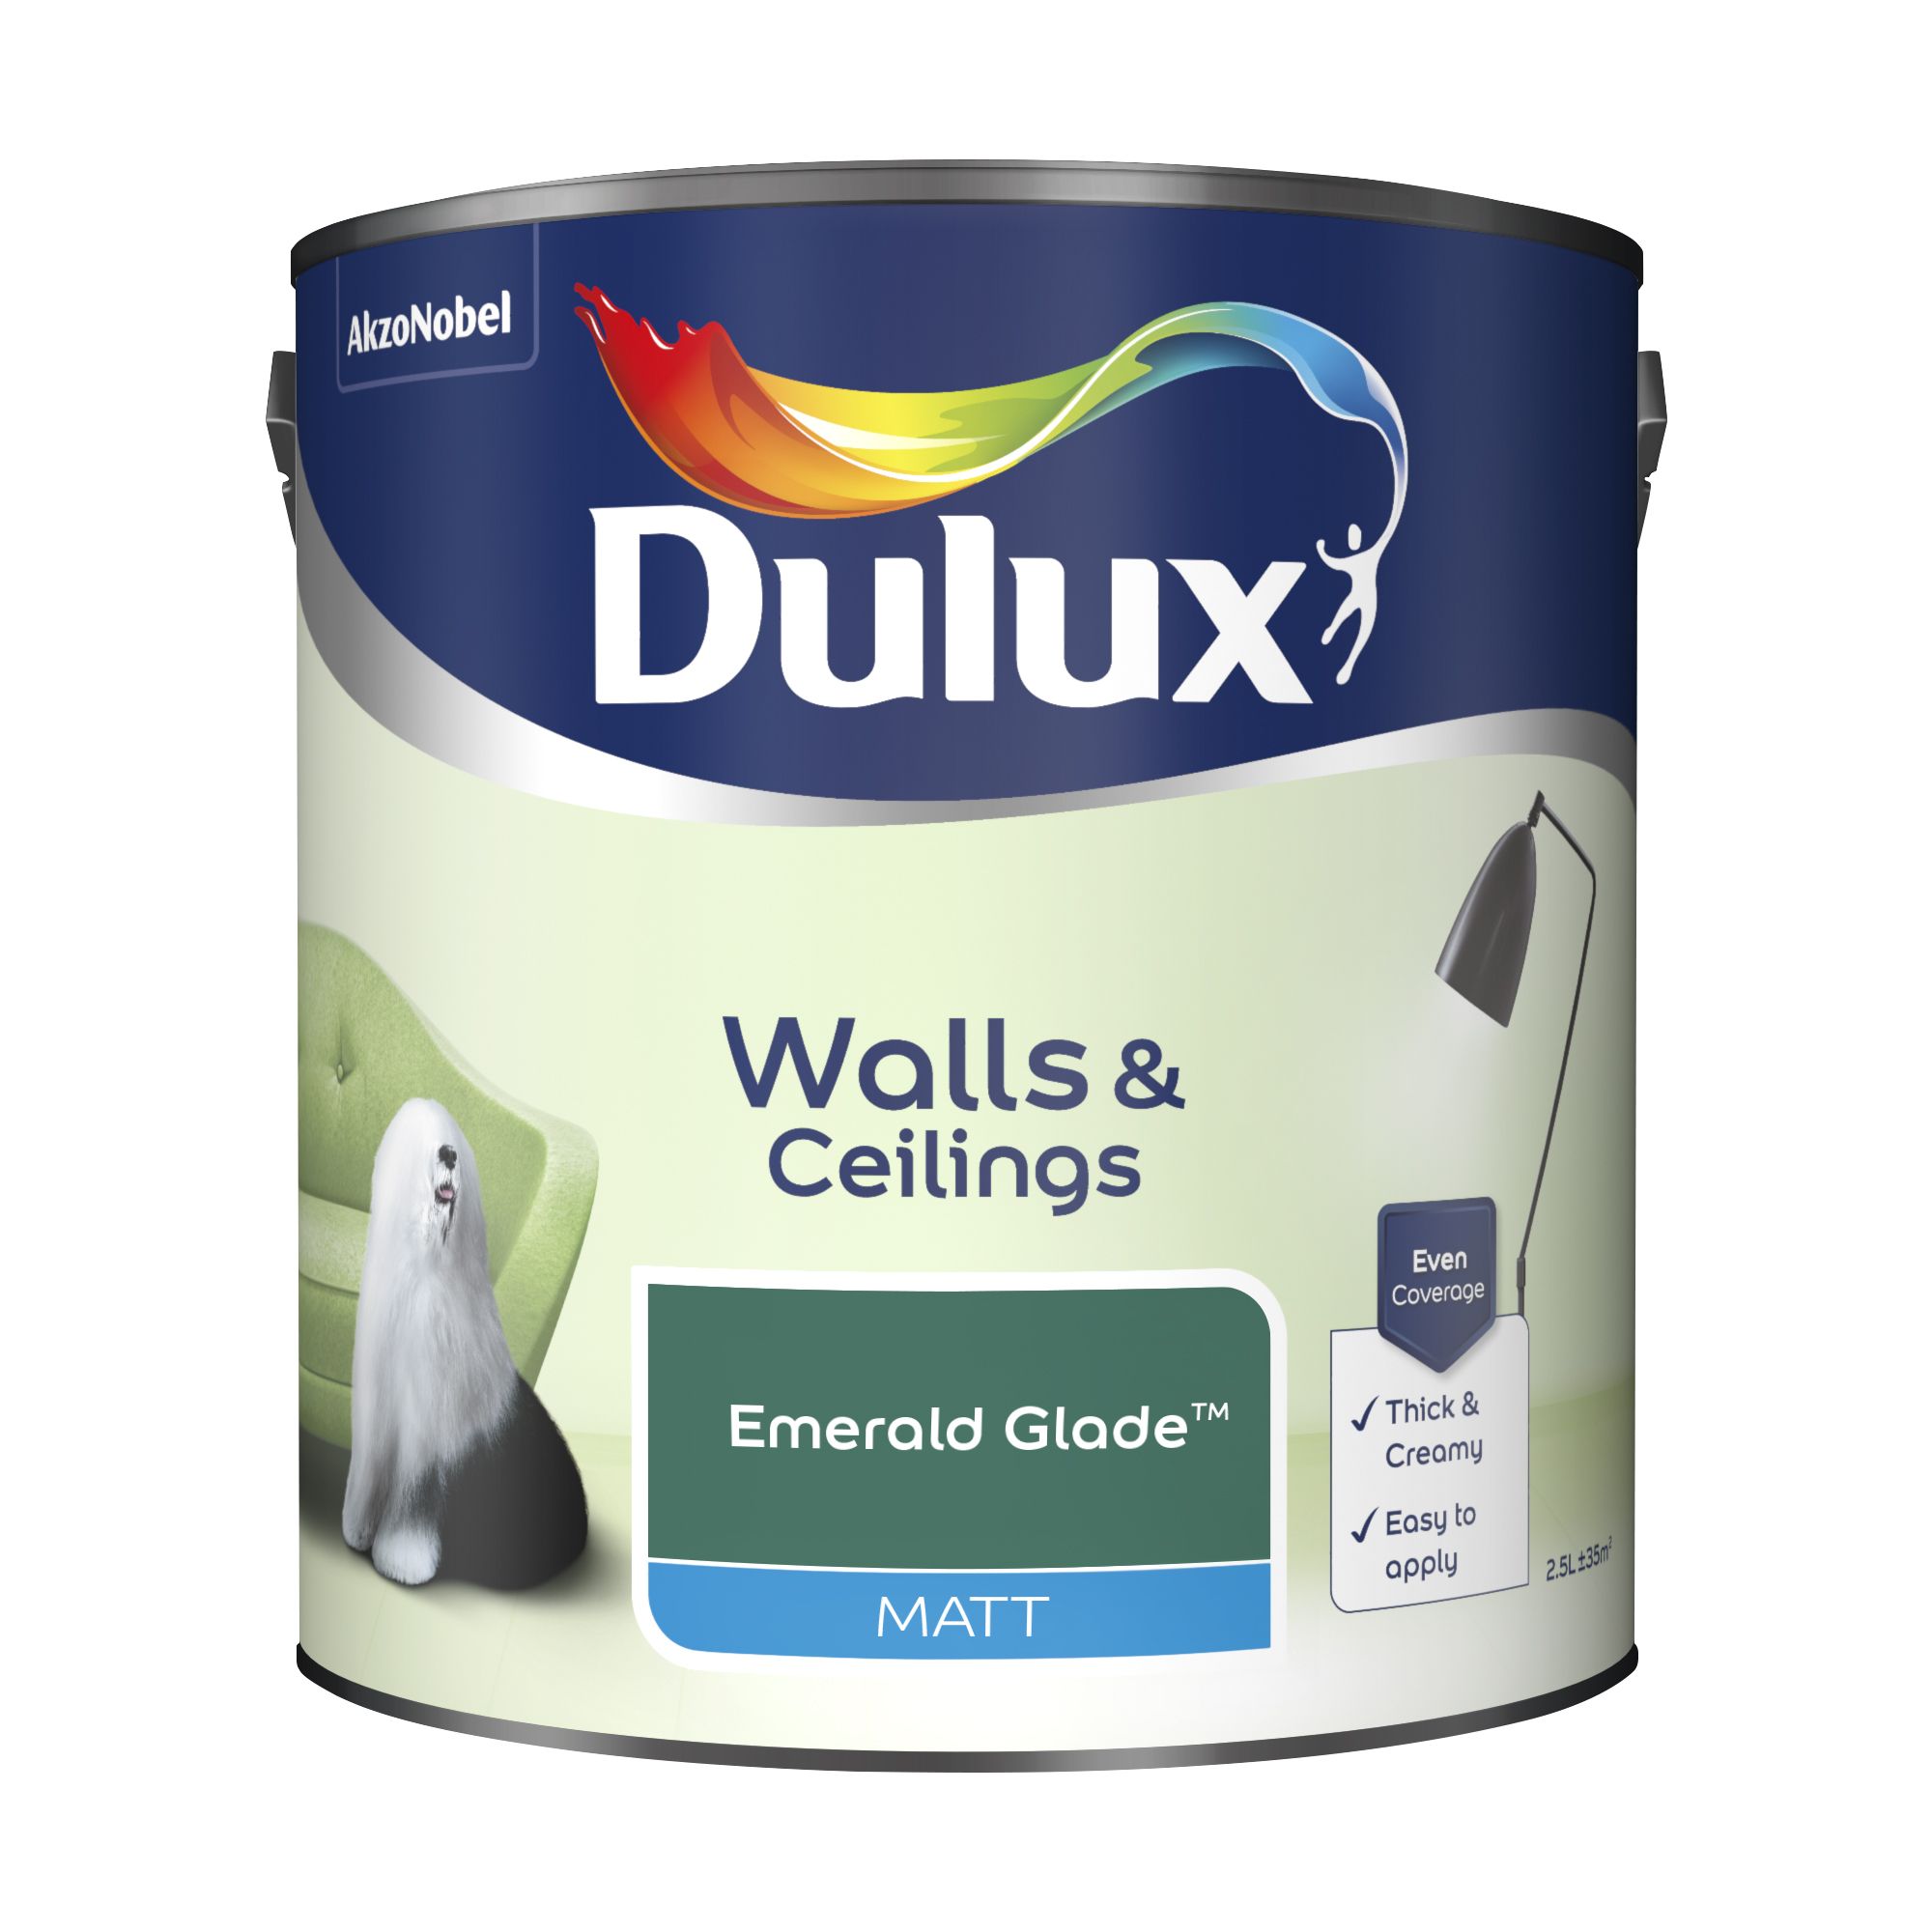 Dulux Walls & ceilings Emerald glade Matt Emulsion paint, 2.5L